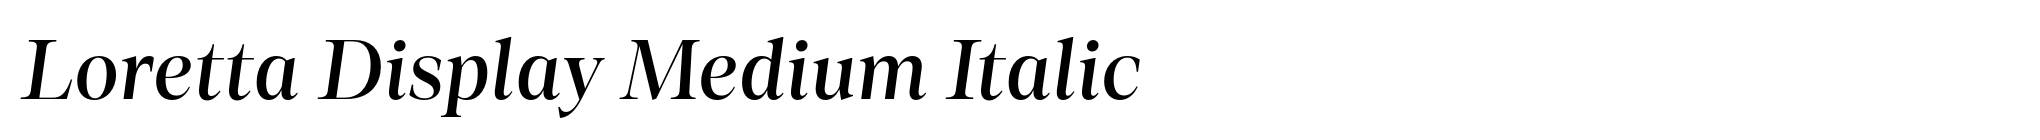 Loretta Display Medium Italic image